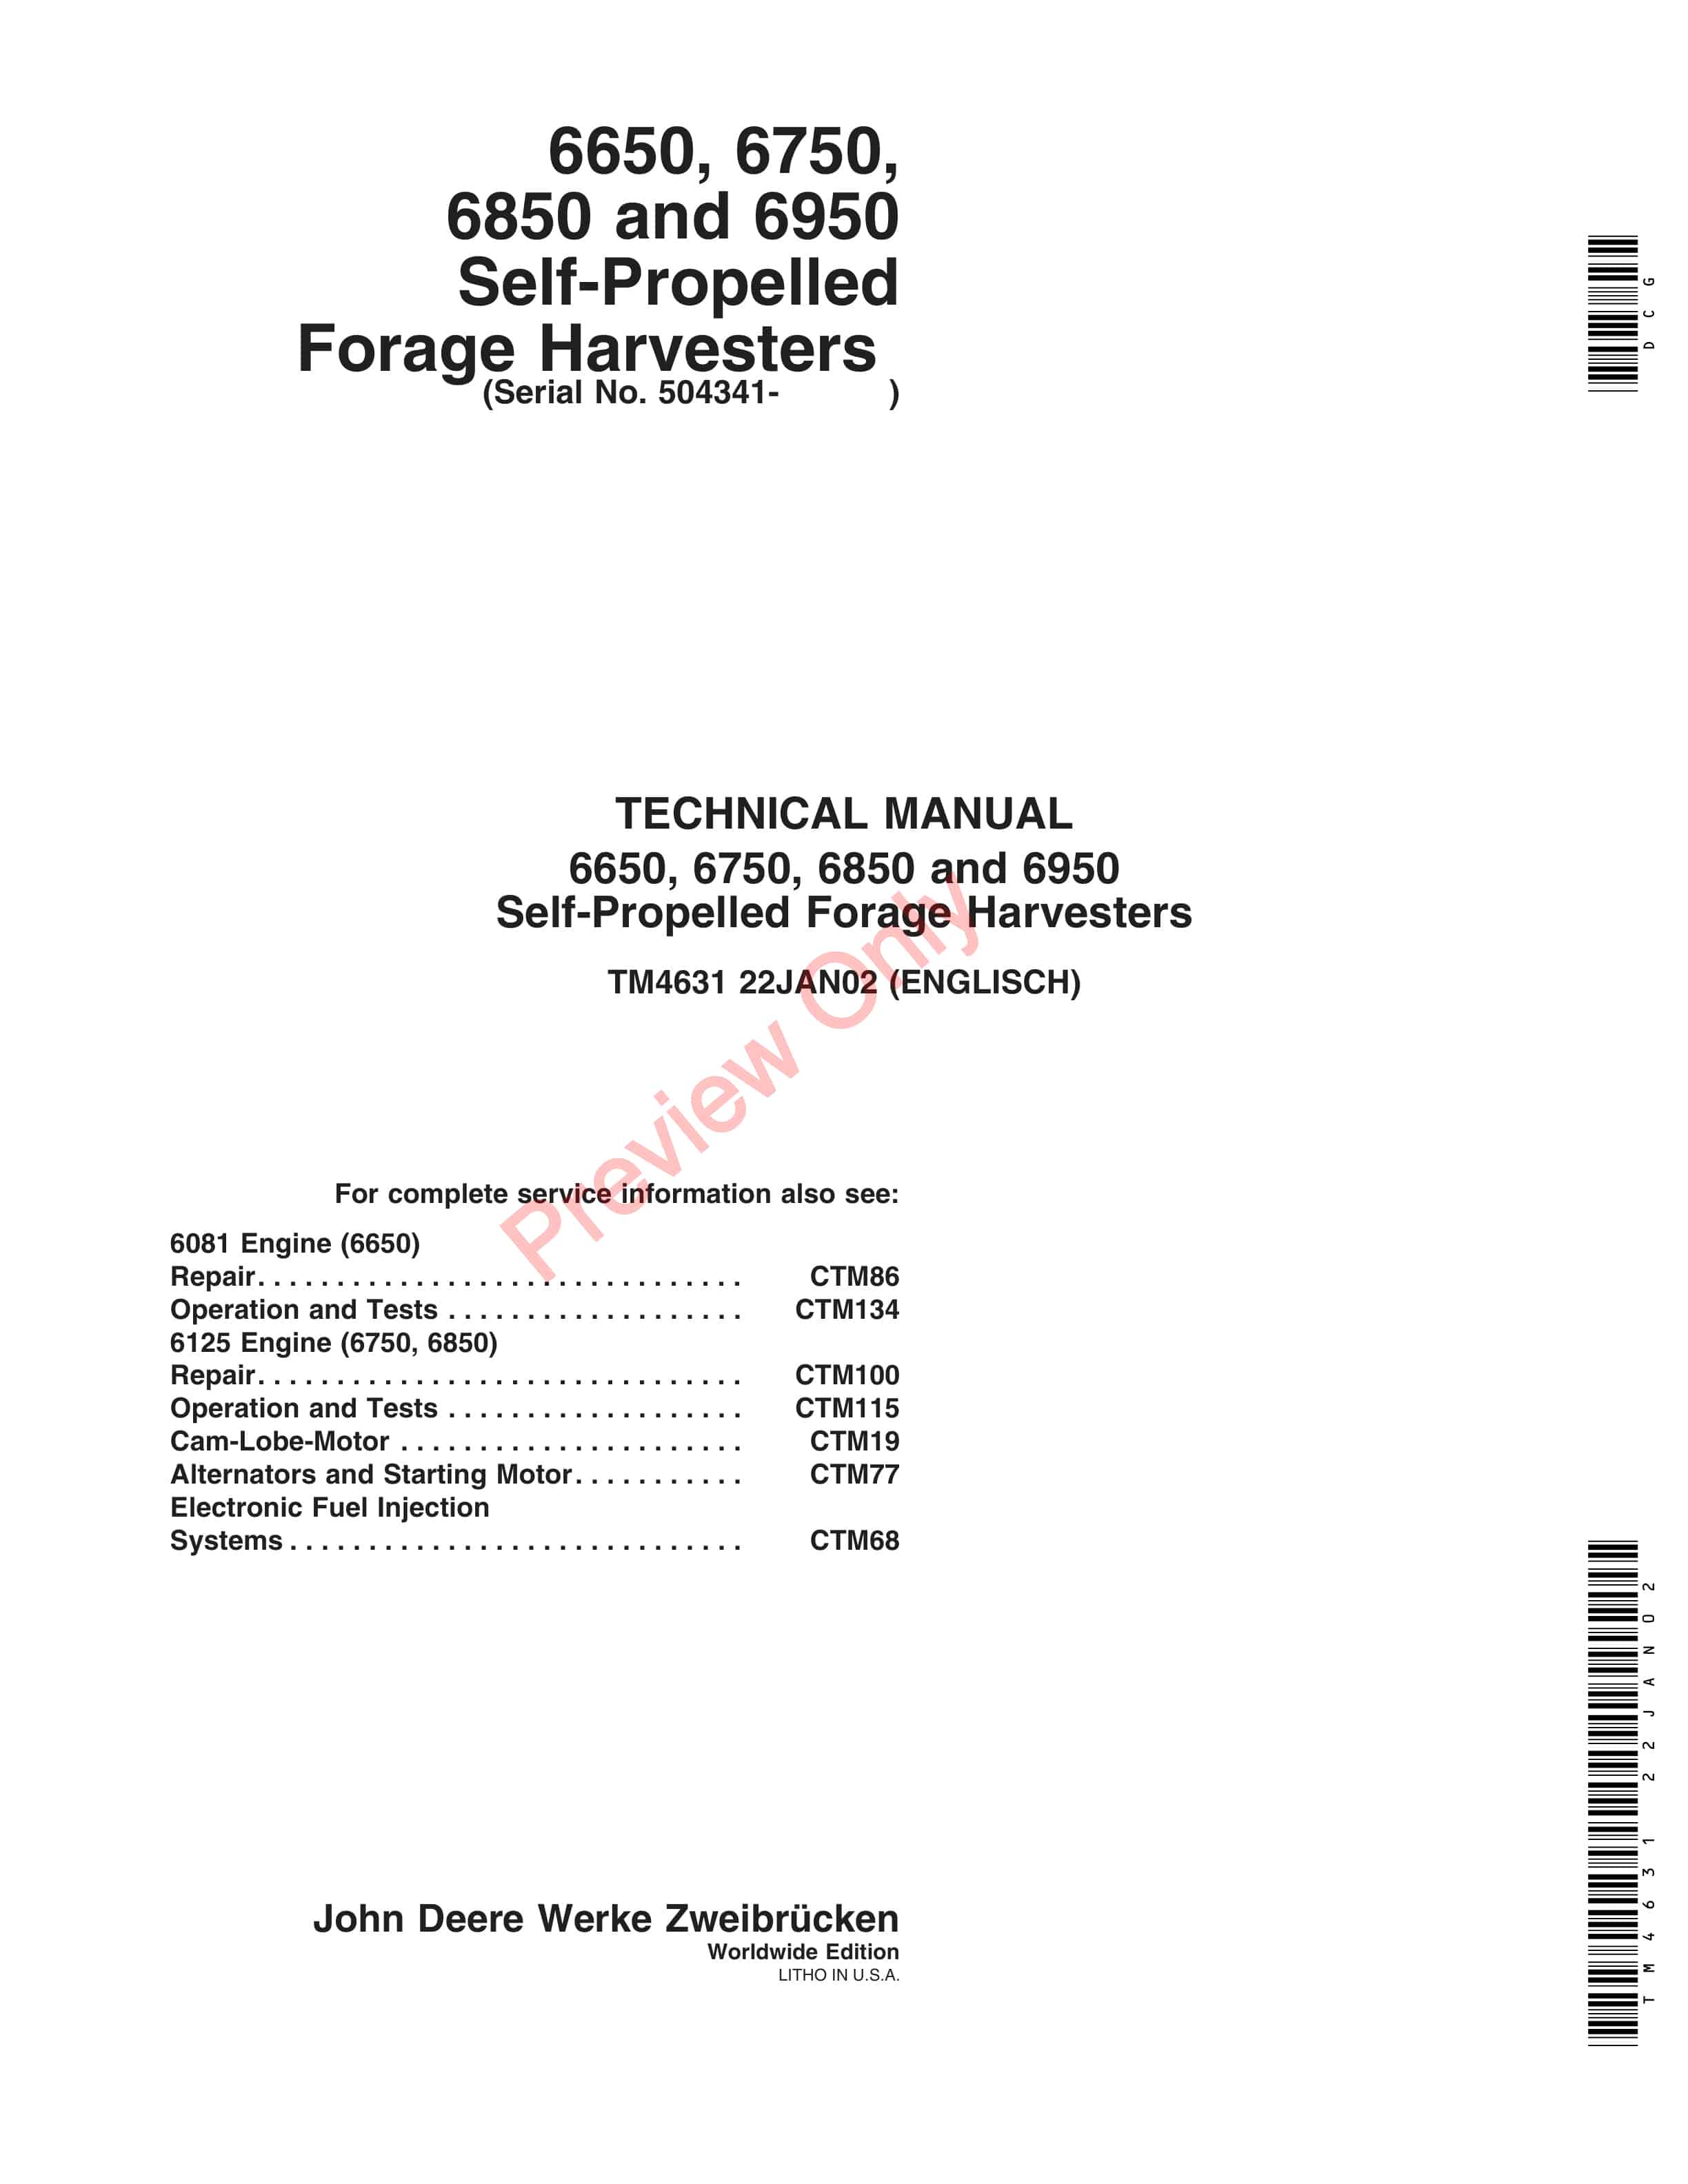 John Deere 6650 6750 6850 and 6950 Self Propelled Forage Harvesters Technical Manual TM4631 22JAN02 1